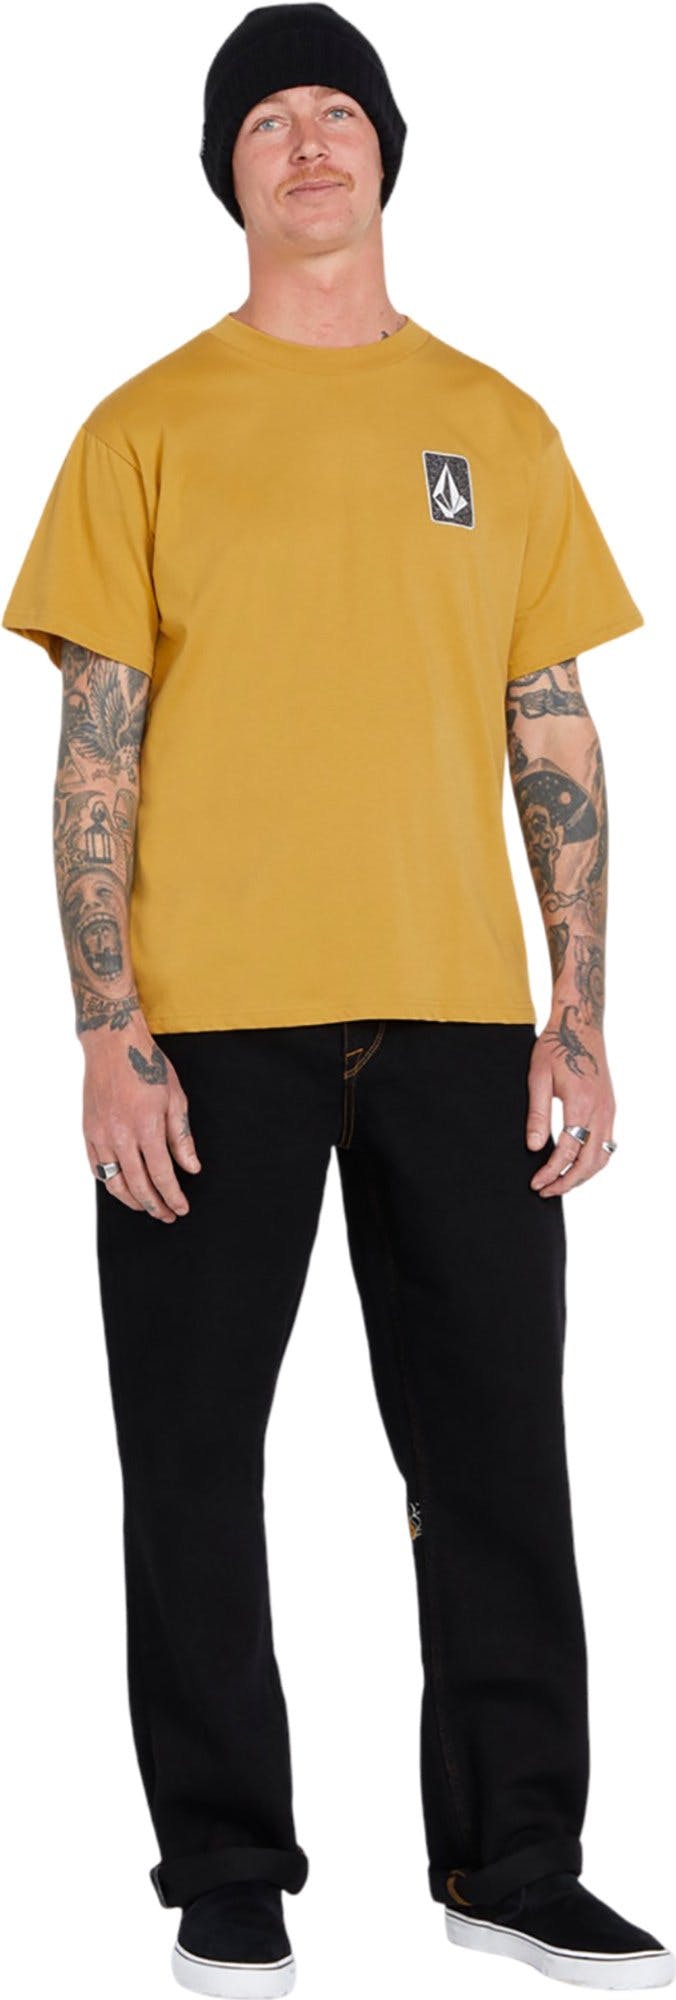 Product gallery image number 4 for product Skate Vitals Originator Short Sleeve T-Shirt  - Men's